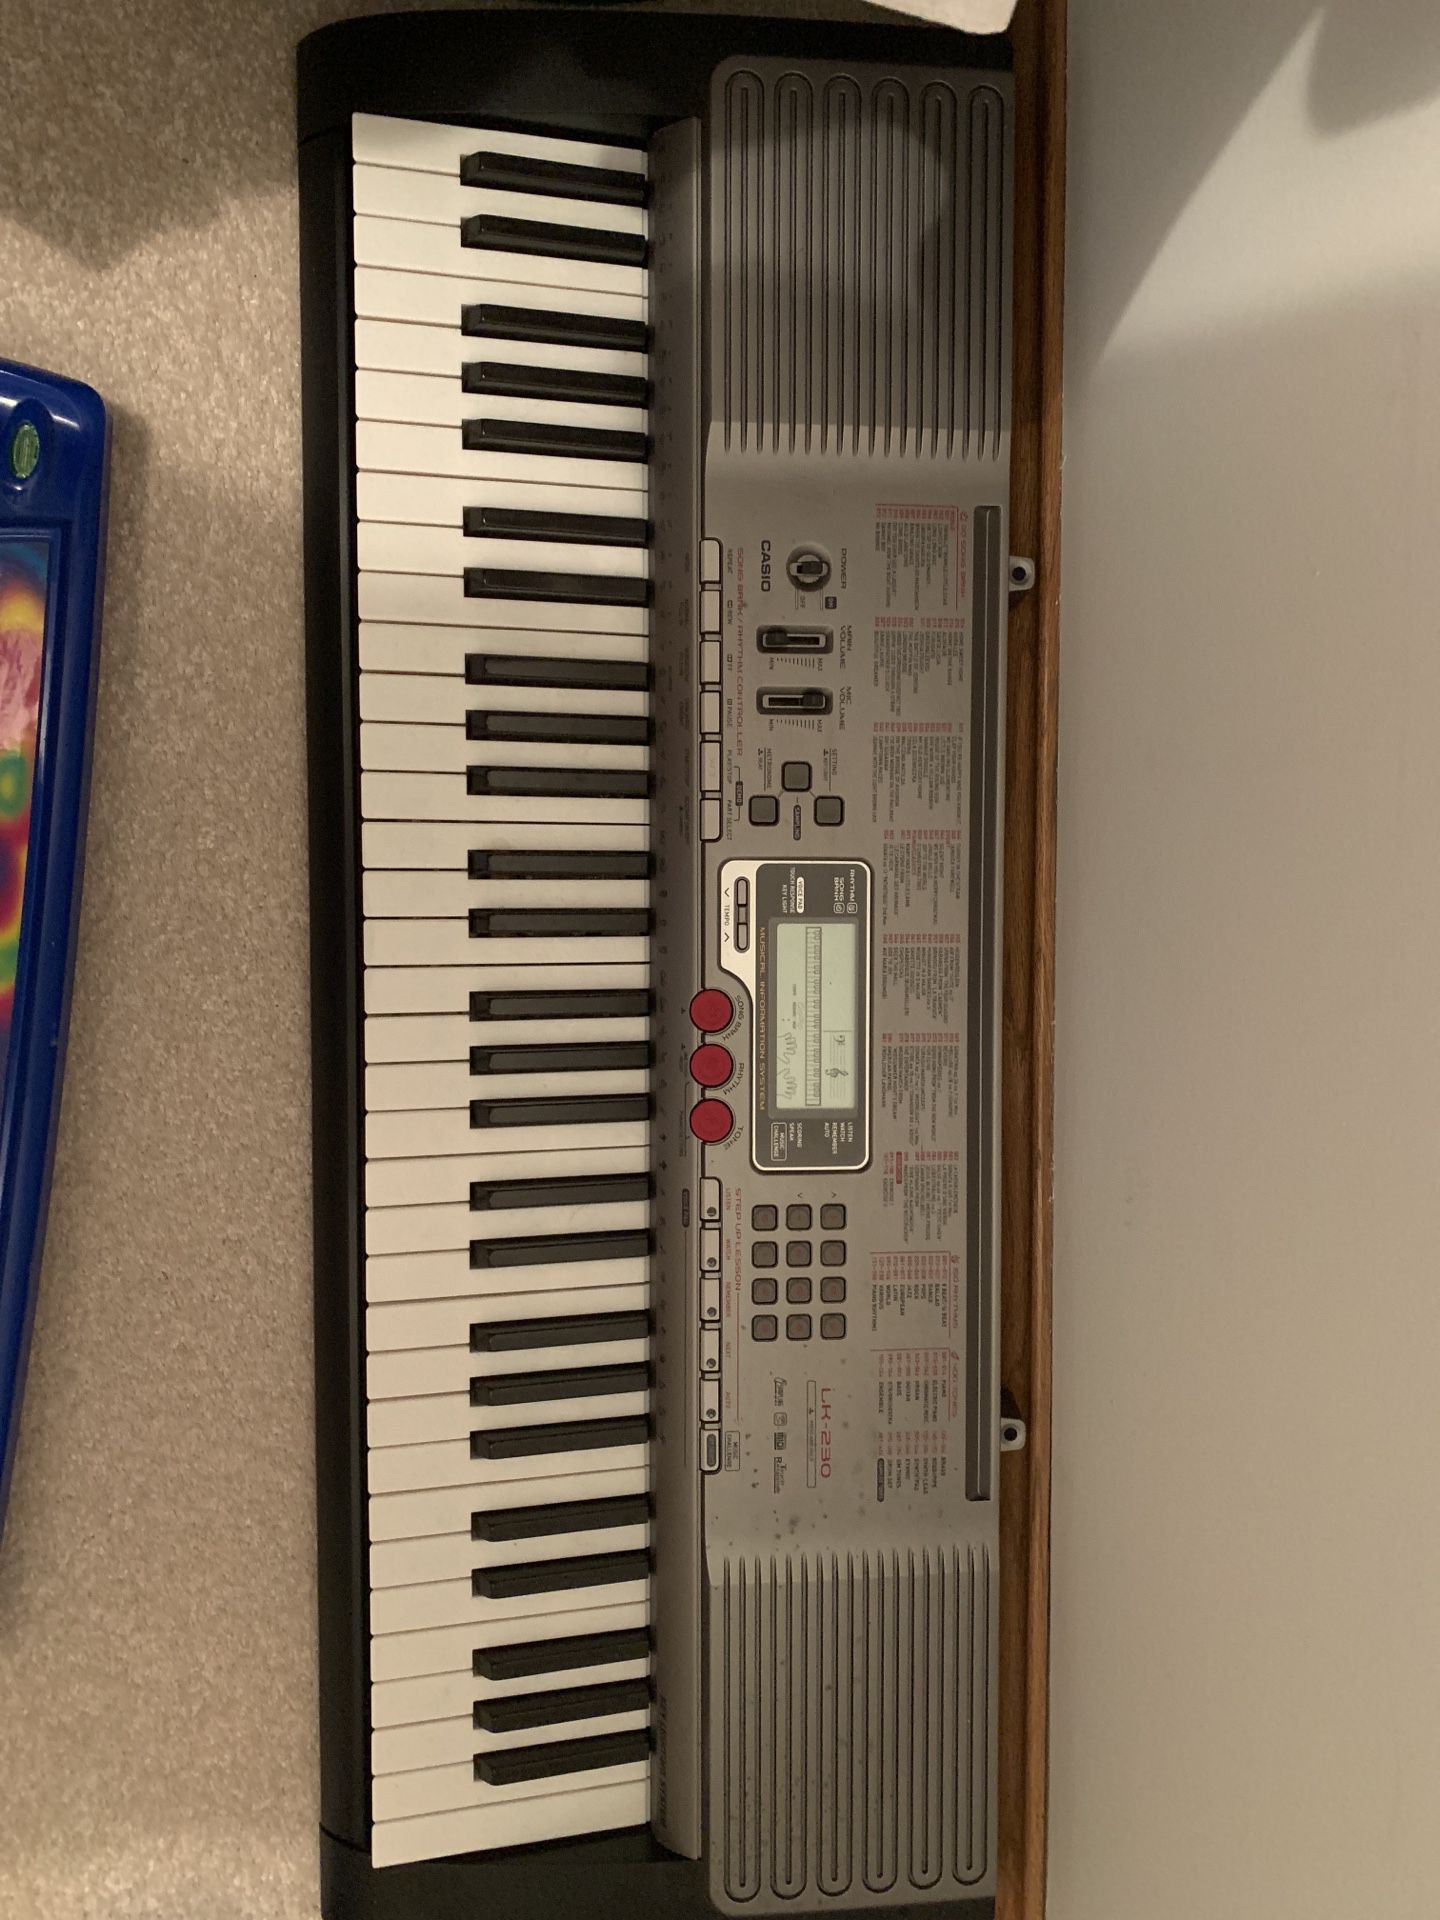 Casio LK230 musical keyboard